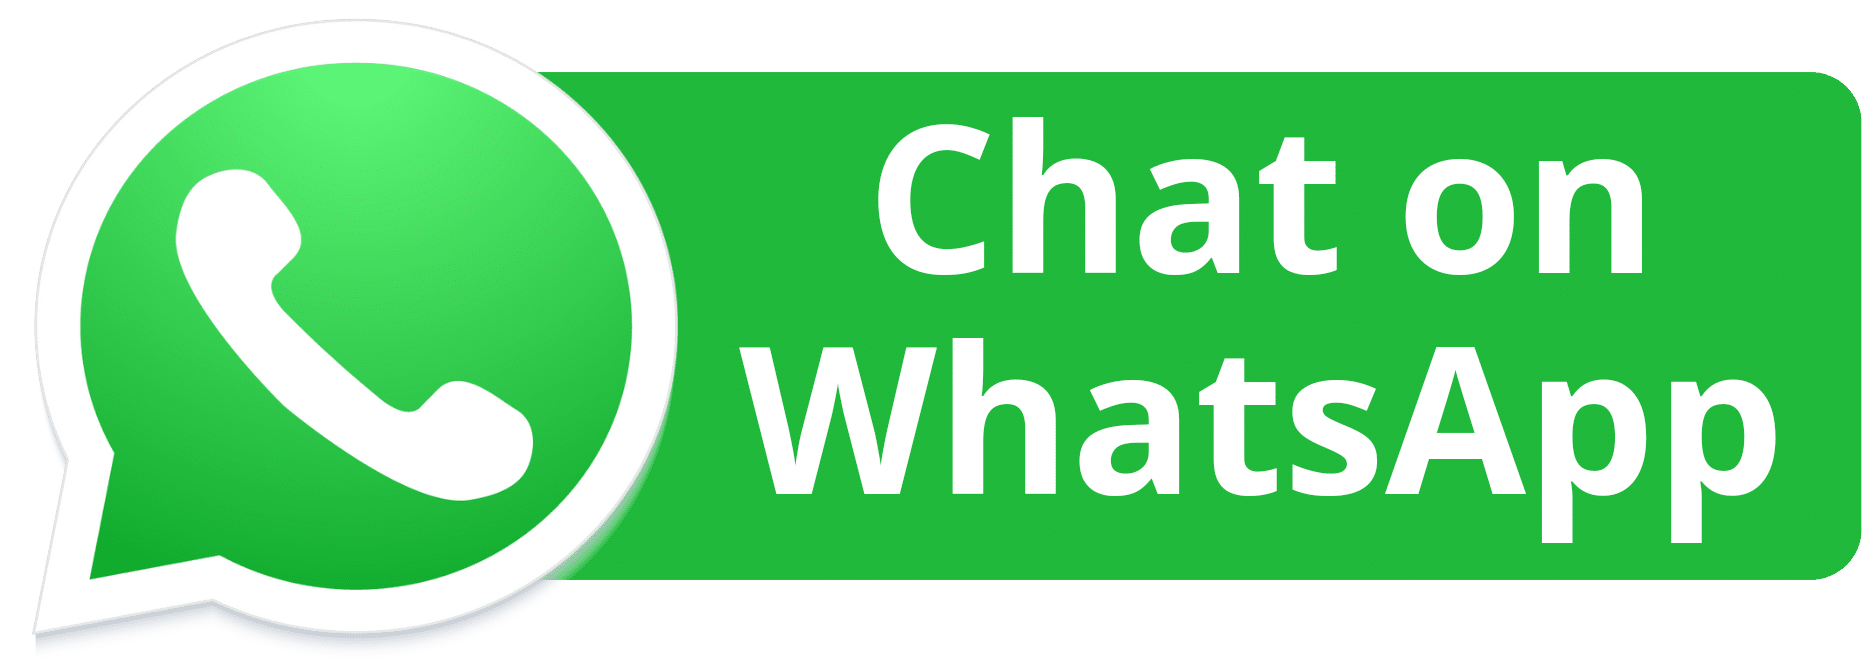 whatsapp button new